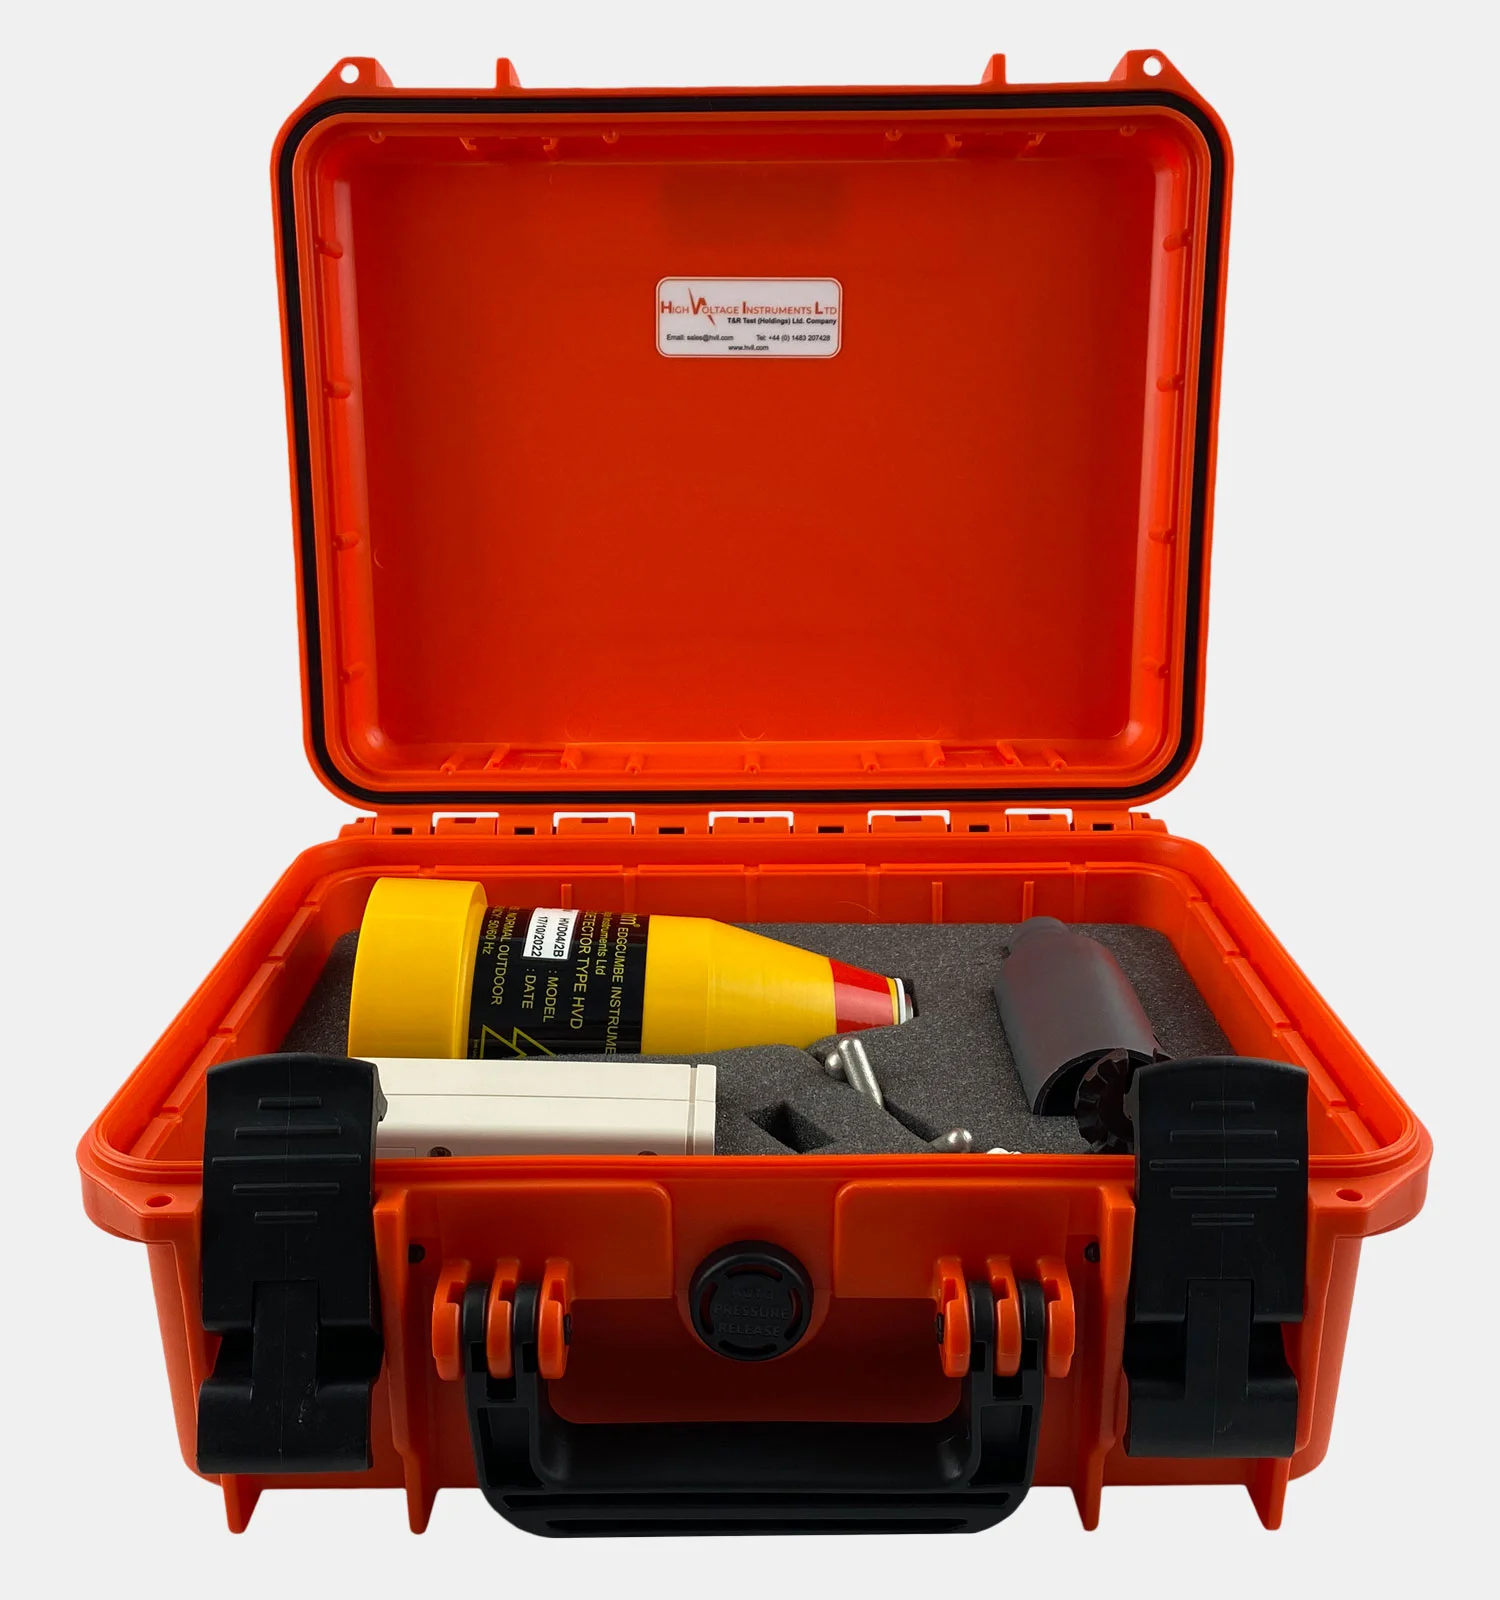 UK Suppliers of HVD04/2B High Voltage Detector Kit